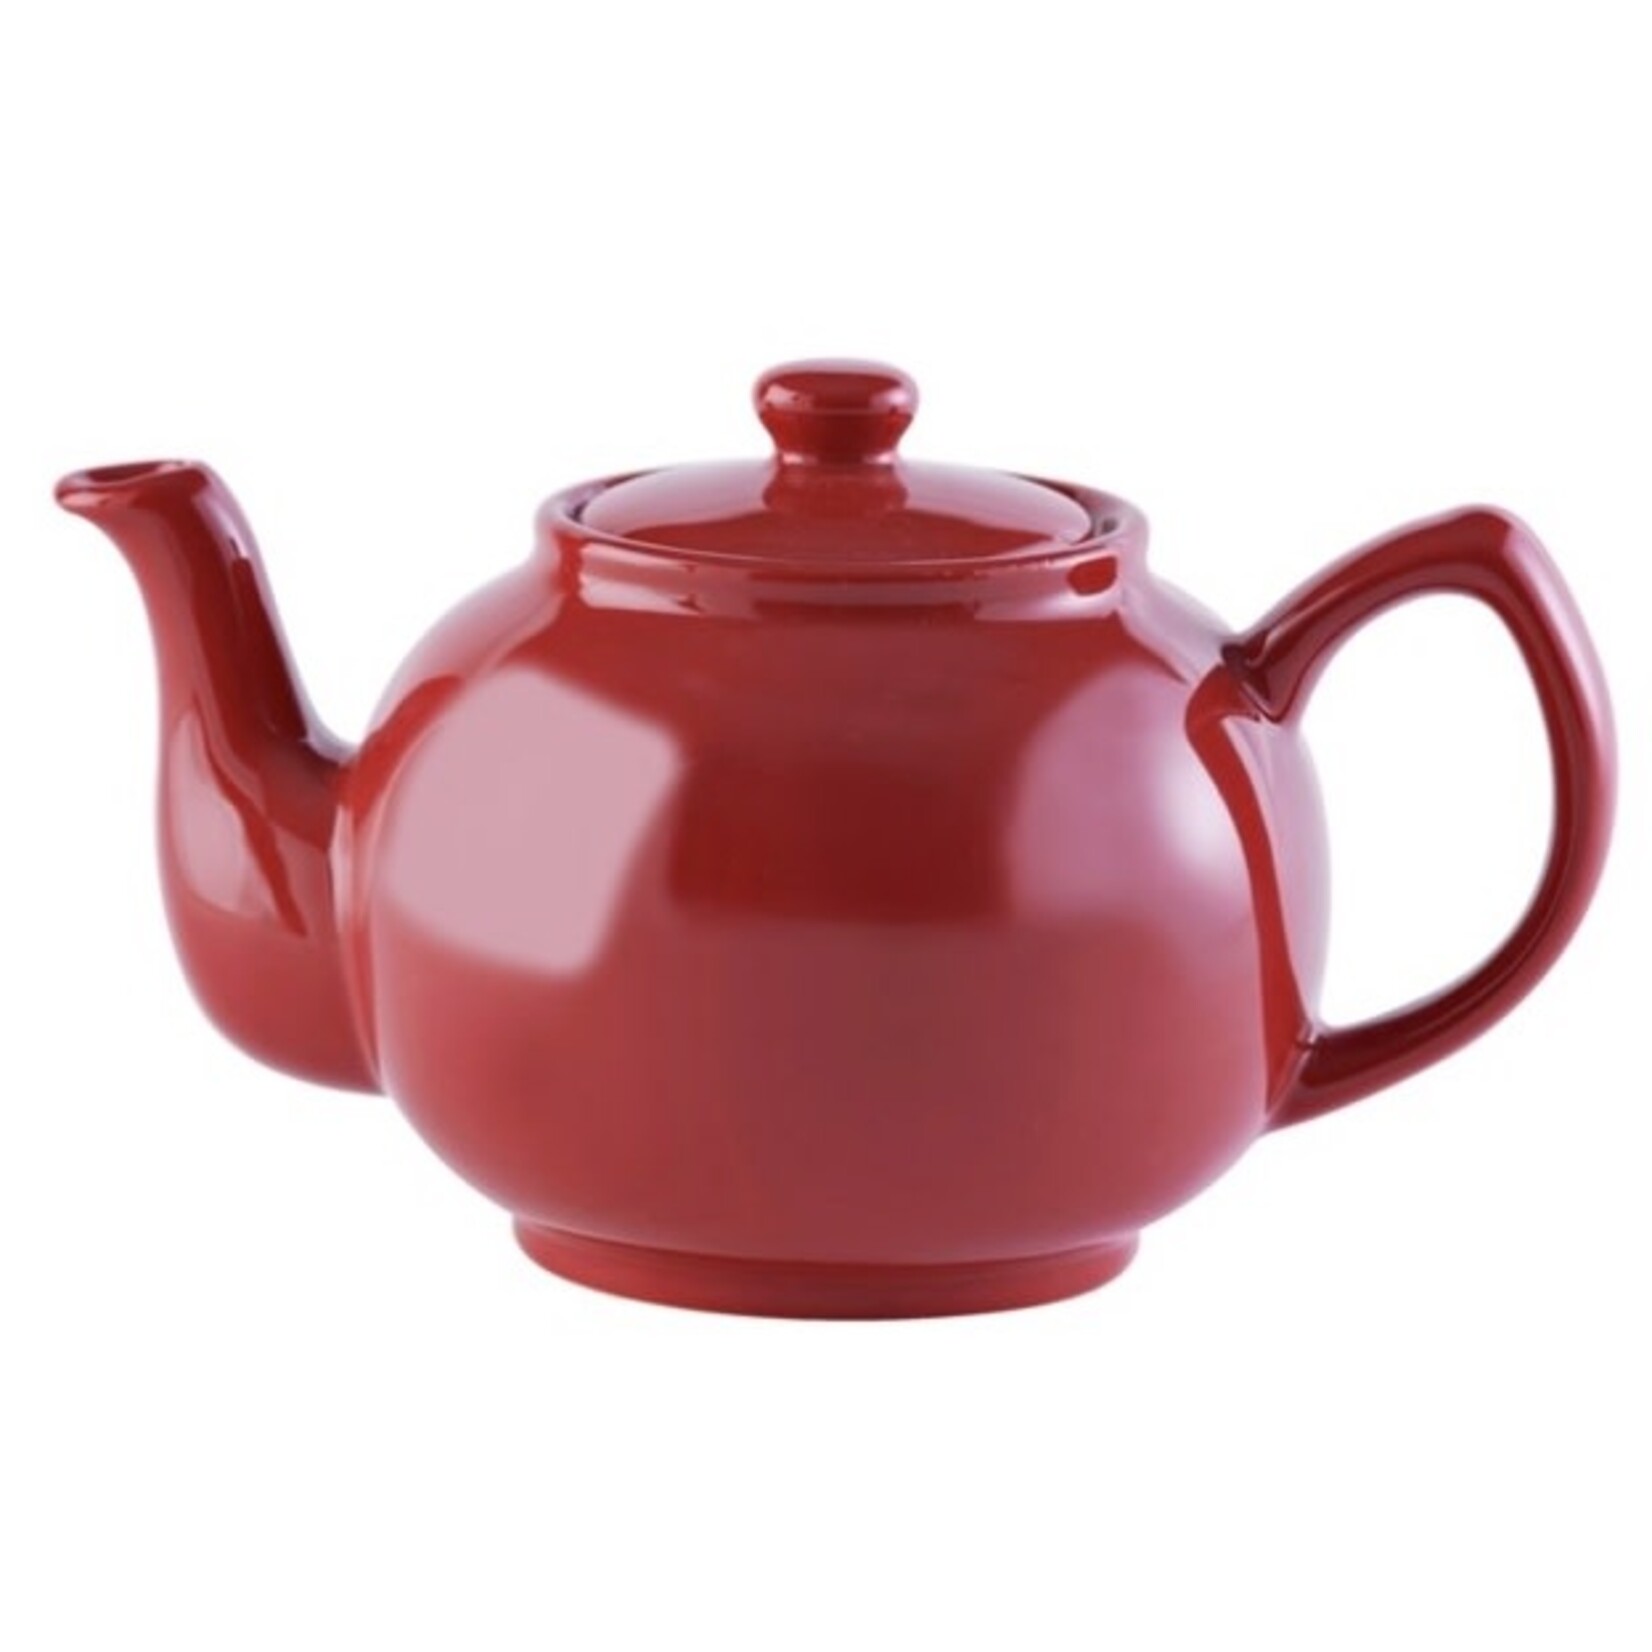 PRICE & KENSINGTON PRICE & KENSINGTON Brights Teapot 6 Cup Red